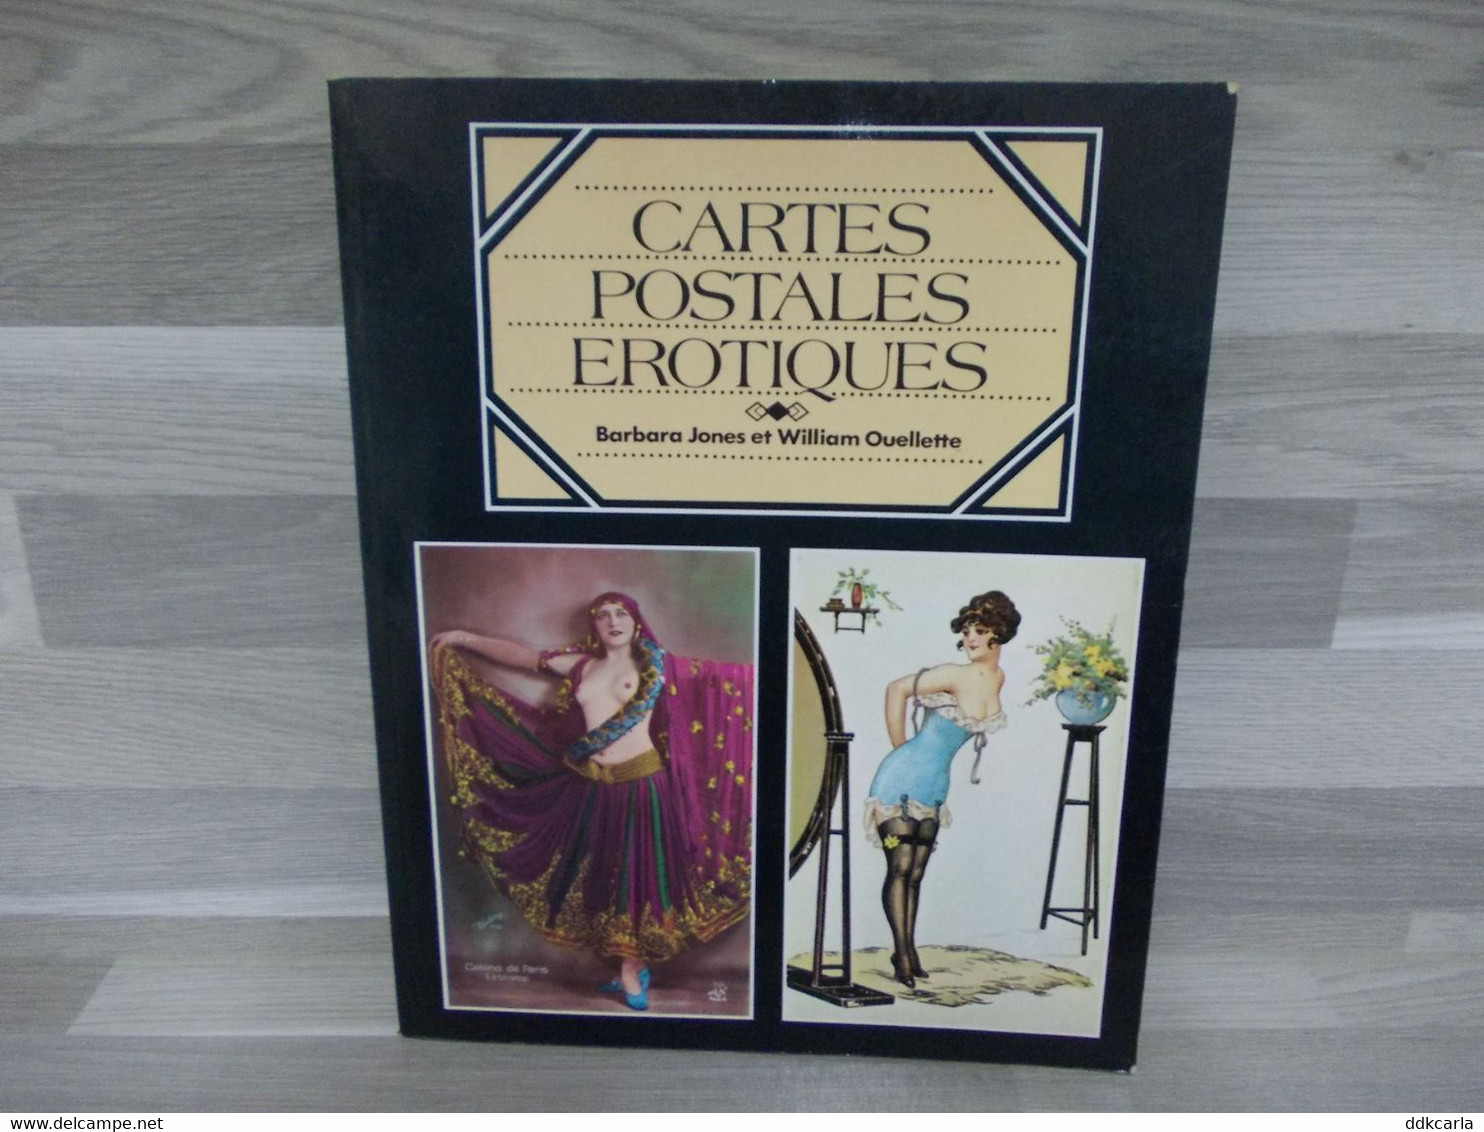 Cartes Postales Erotiques - Barbara Jones Et William Ouellette - Libri & Cataloghi